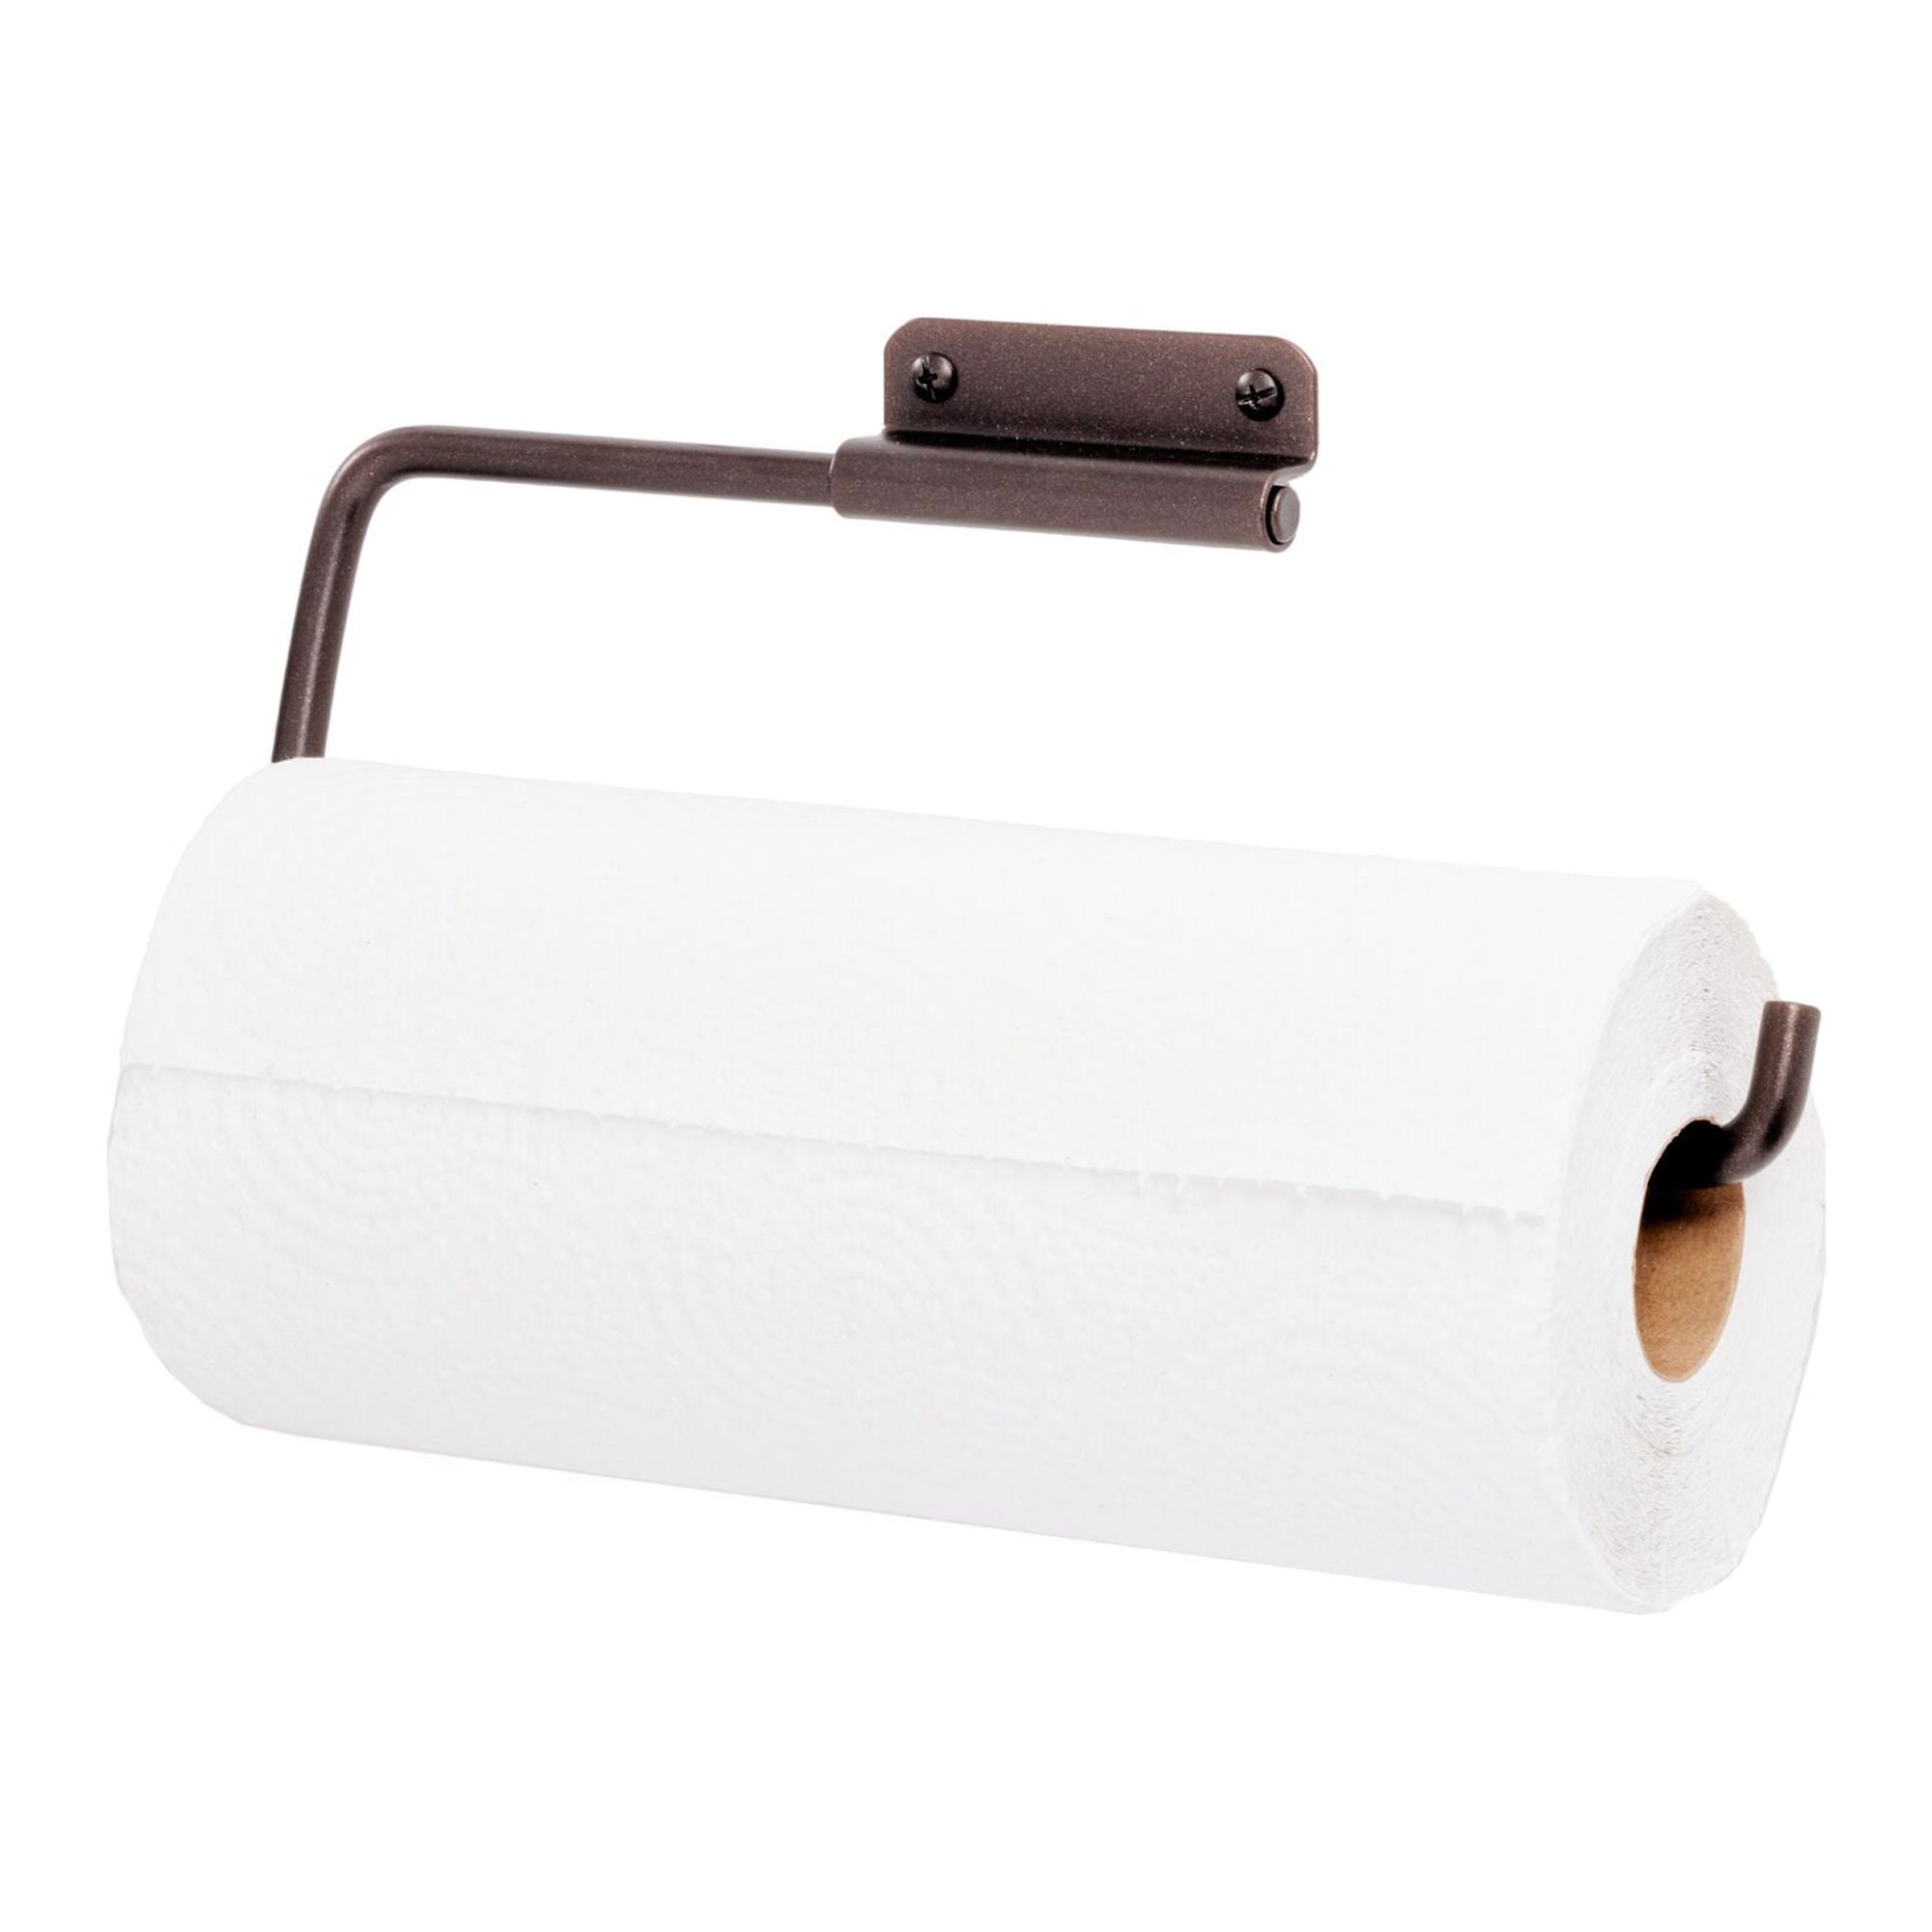 iDesign Swivel Paper Towel Holder for Kitchen, Wall Mount, Under Cabinet, Bronze - image 1 of 7